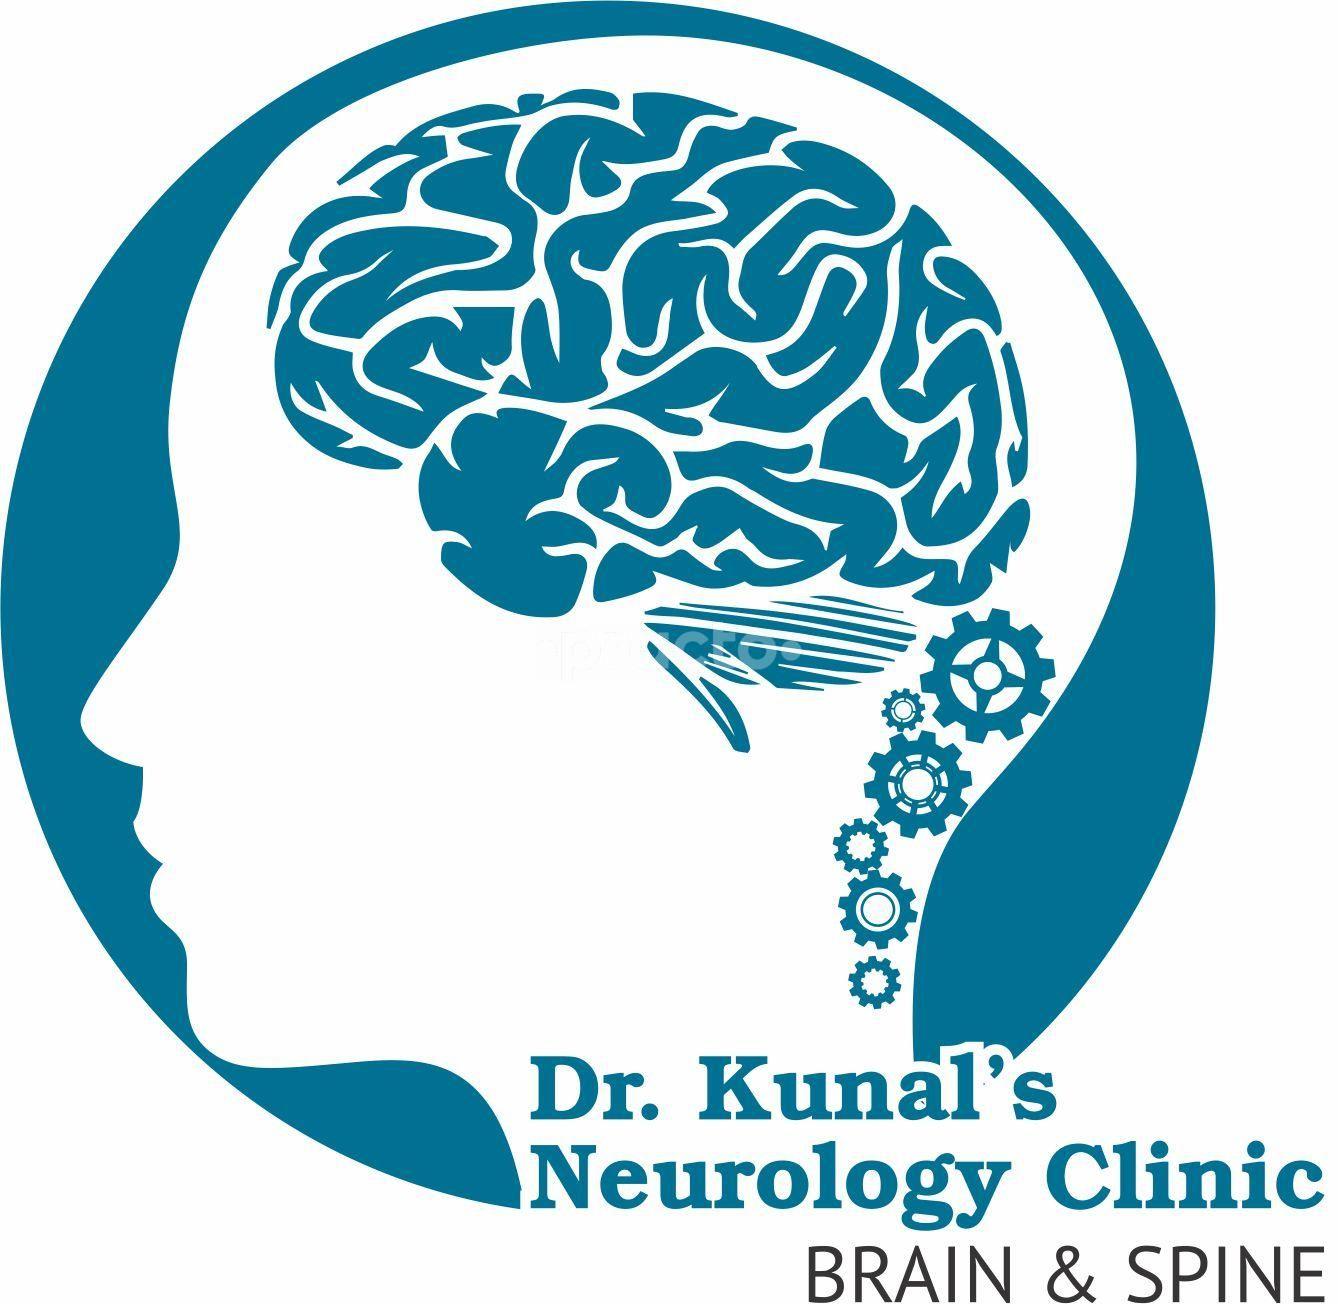 Neurology Logo - Dr. Kunal Bahrani - Neurologist - Book Appointment Online, View Fees ...